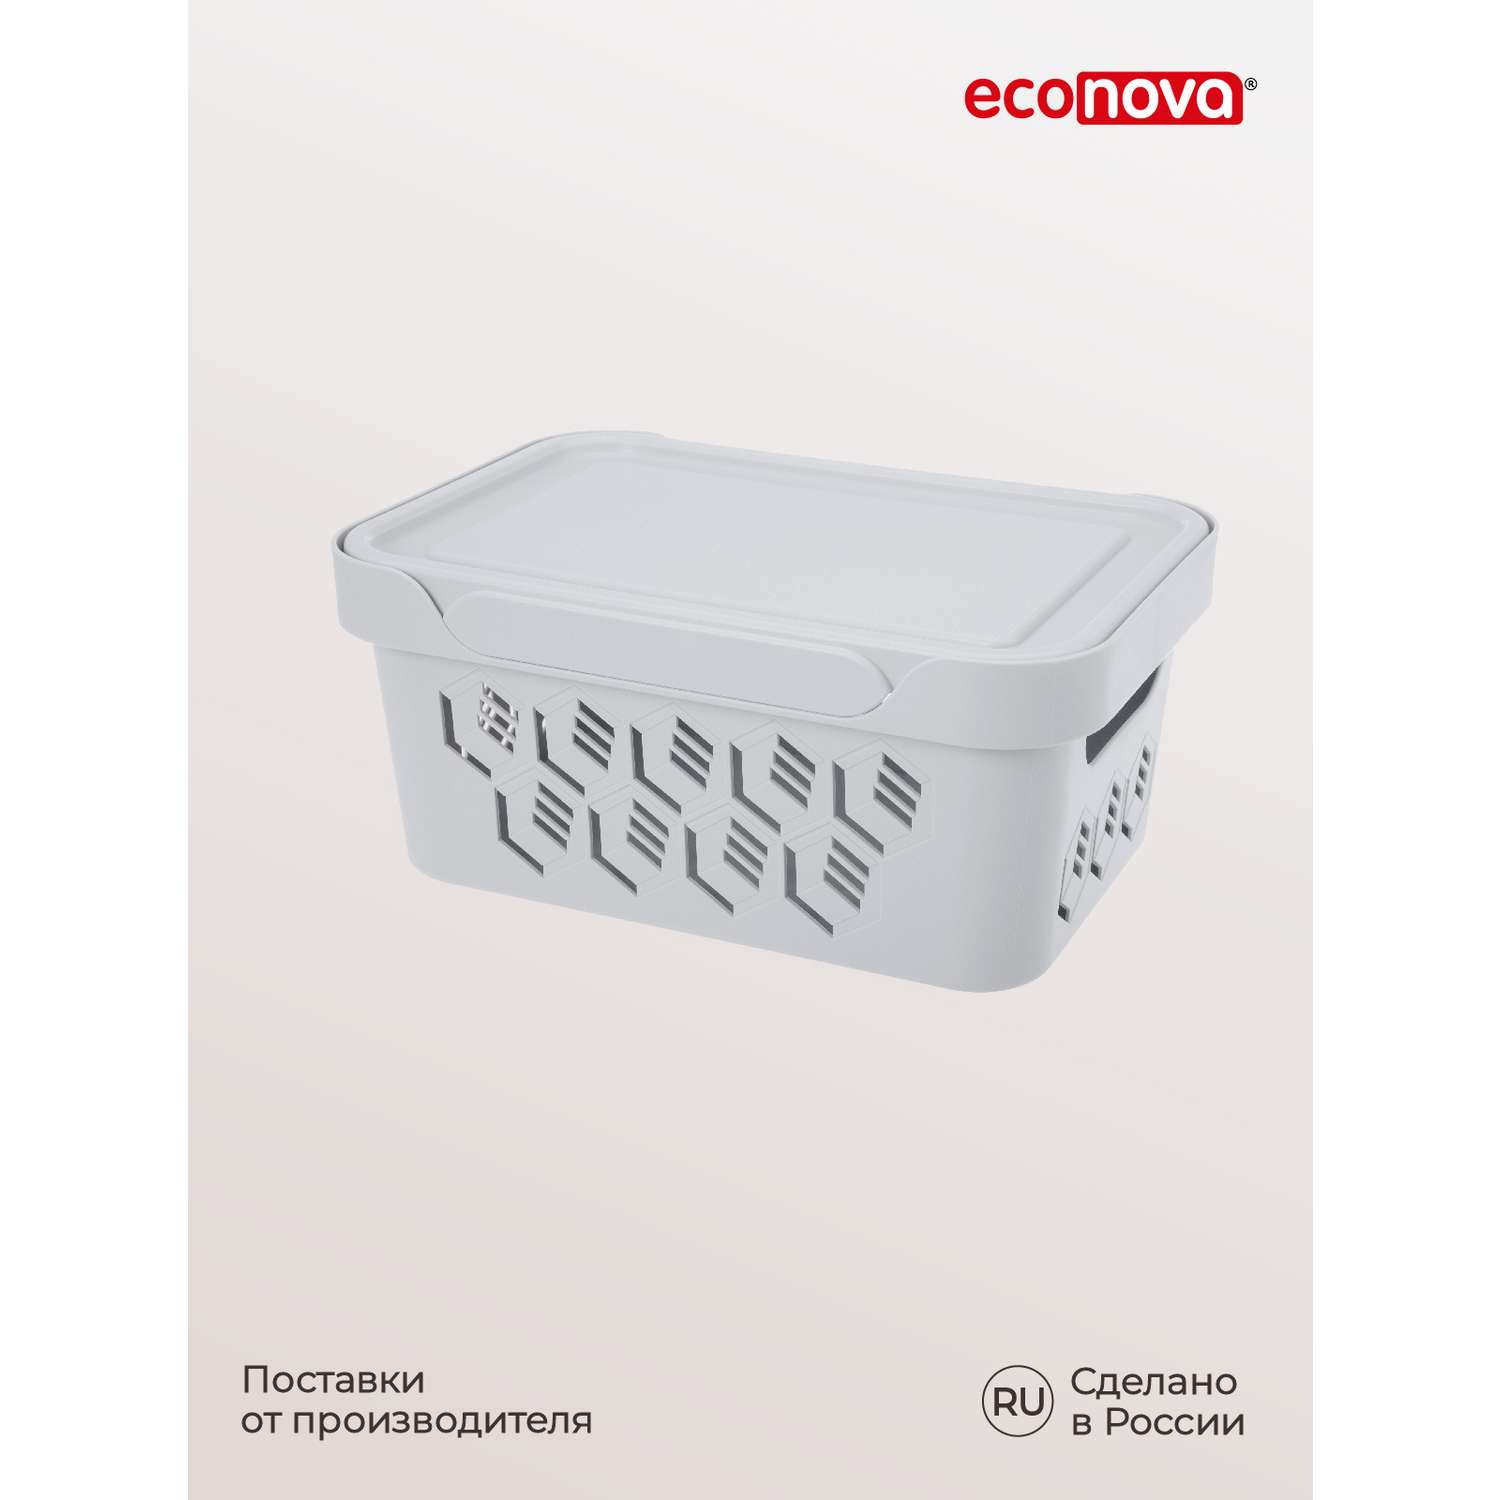 Коробка Econova с крышкой DELUXE 4.6Л светло-серая - фото 9